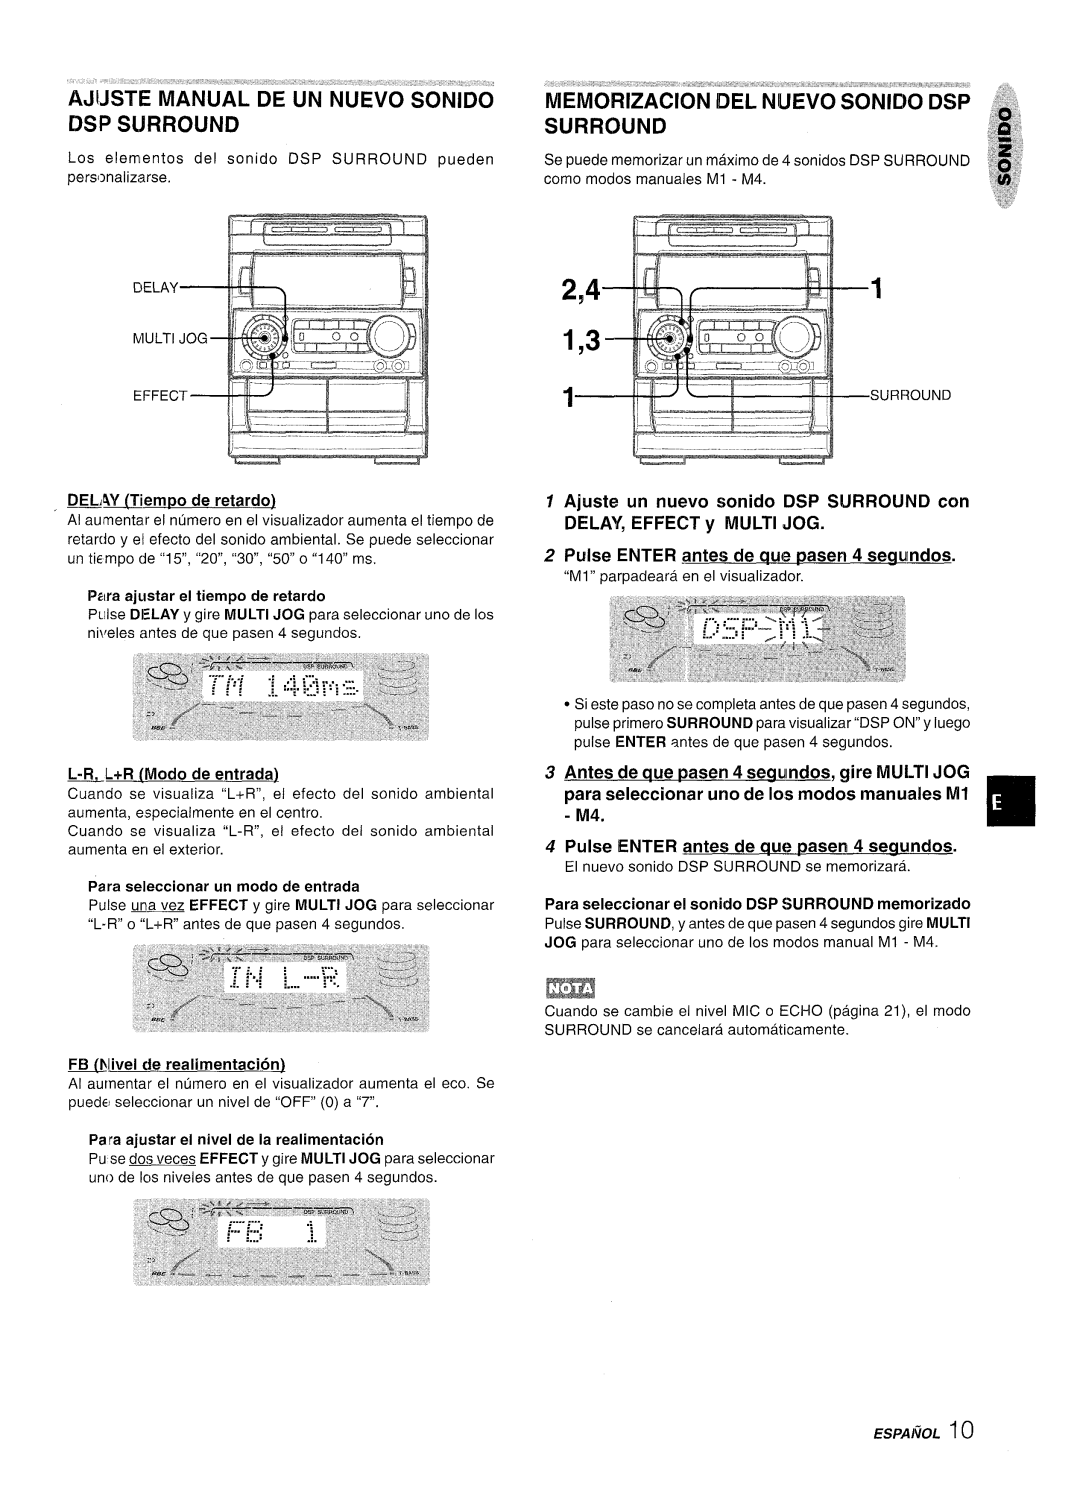 Aiwa NSX-A909 manual Ajjste, Manual”De, Un Nuevo, SO~iDO, MEM’OiilZACION, “i’EL”NiiEVO SONliiOD$P, Dsp Sijrround, Surround 